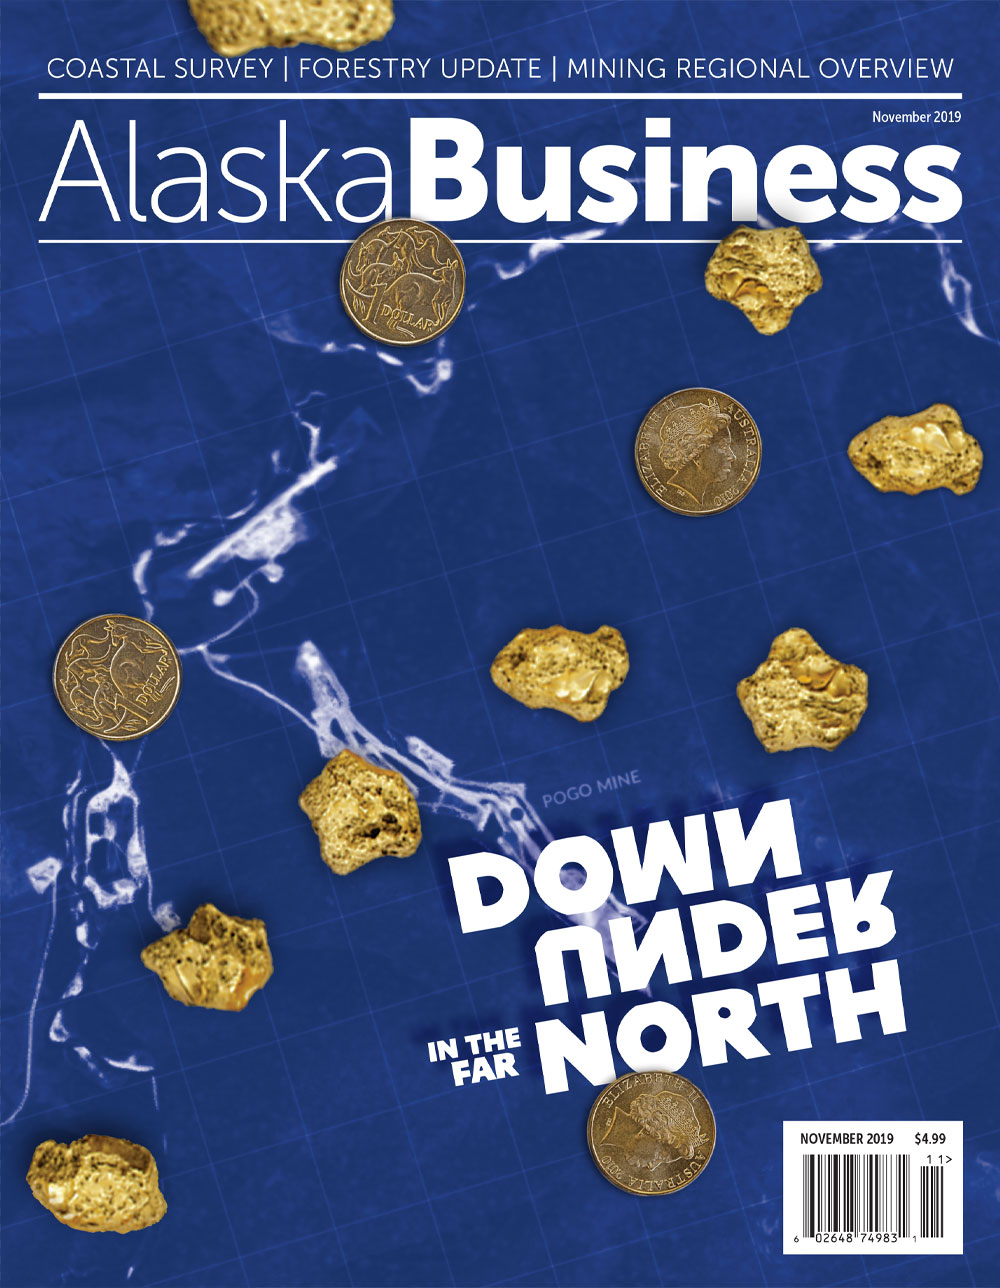 Alaska Business Magazine November 2019 cover